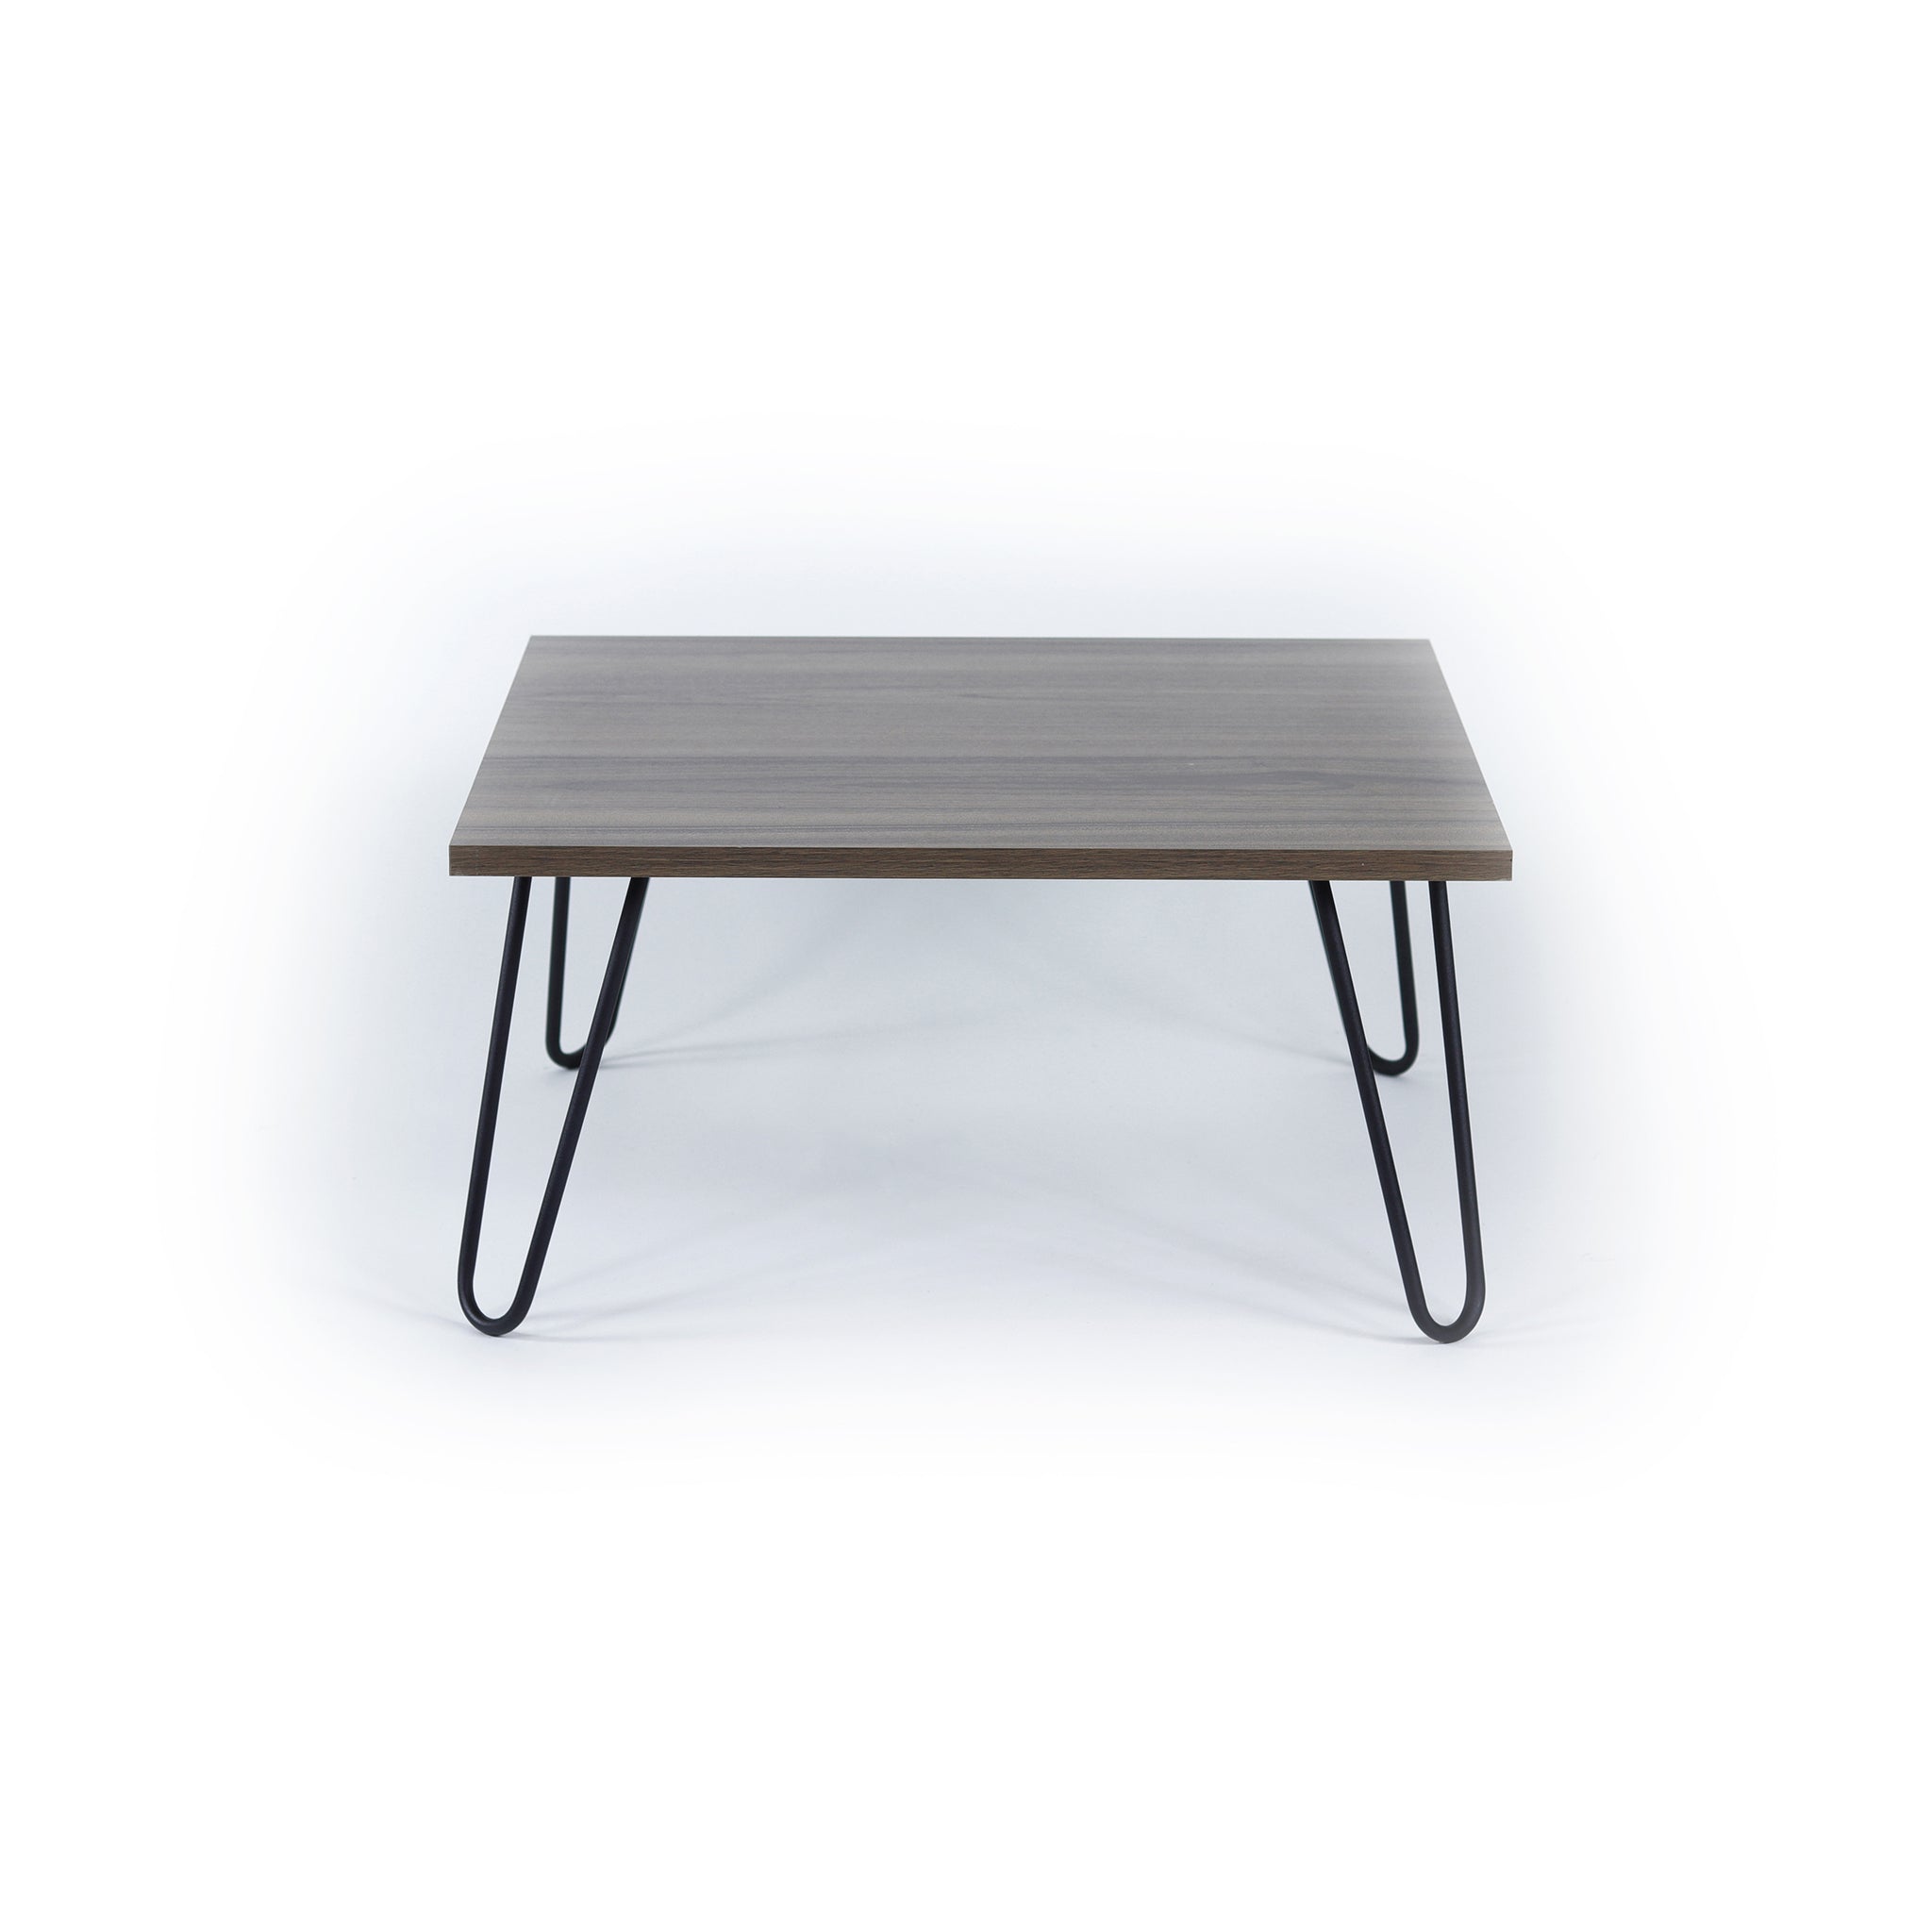 Lona 4 Metal Legs Coffee Table For Living Room